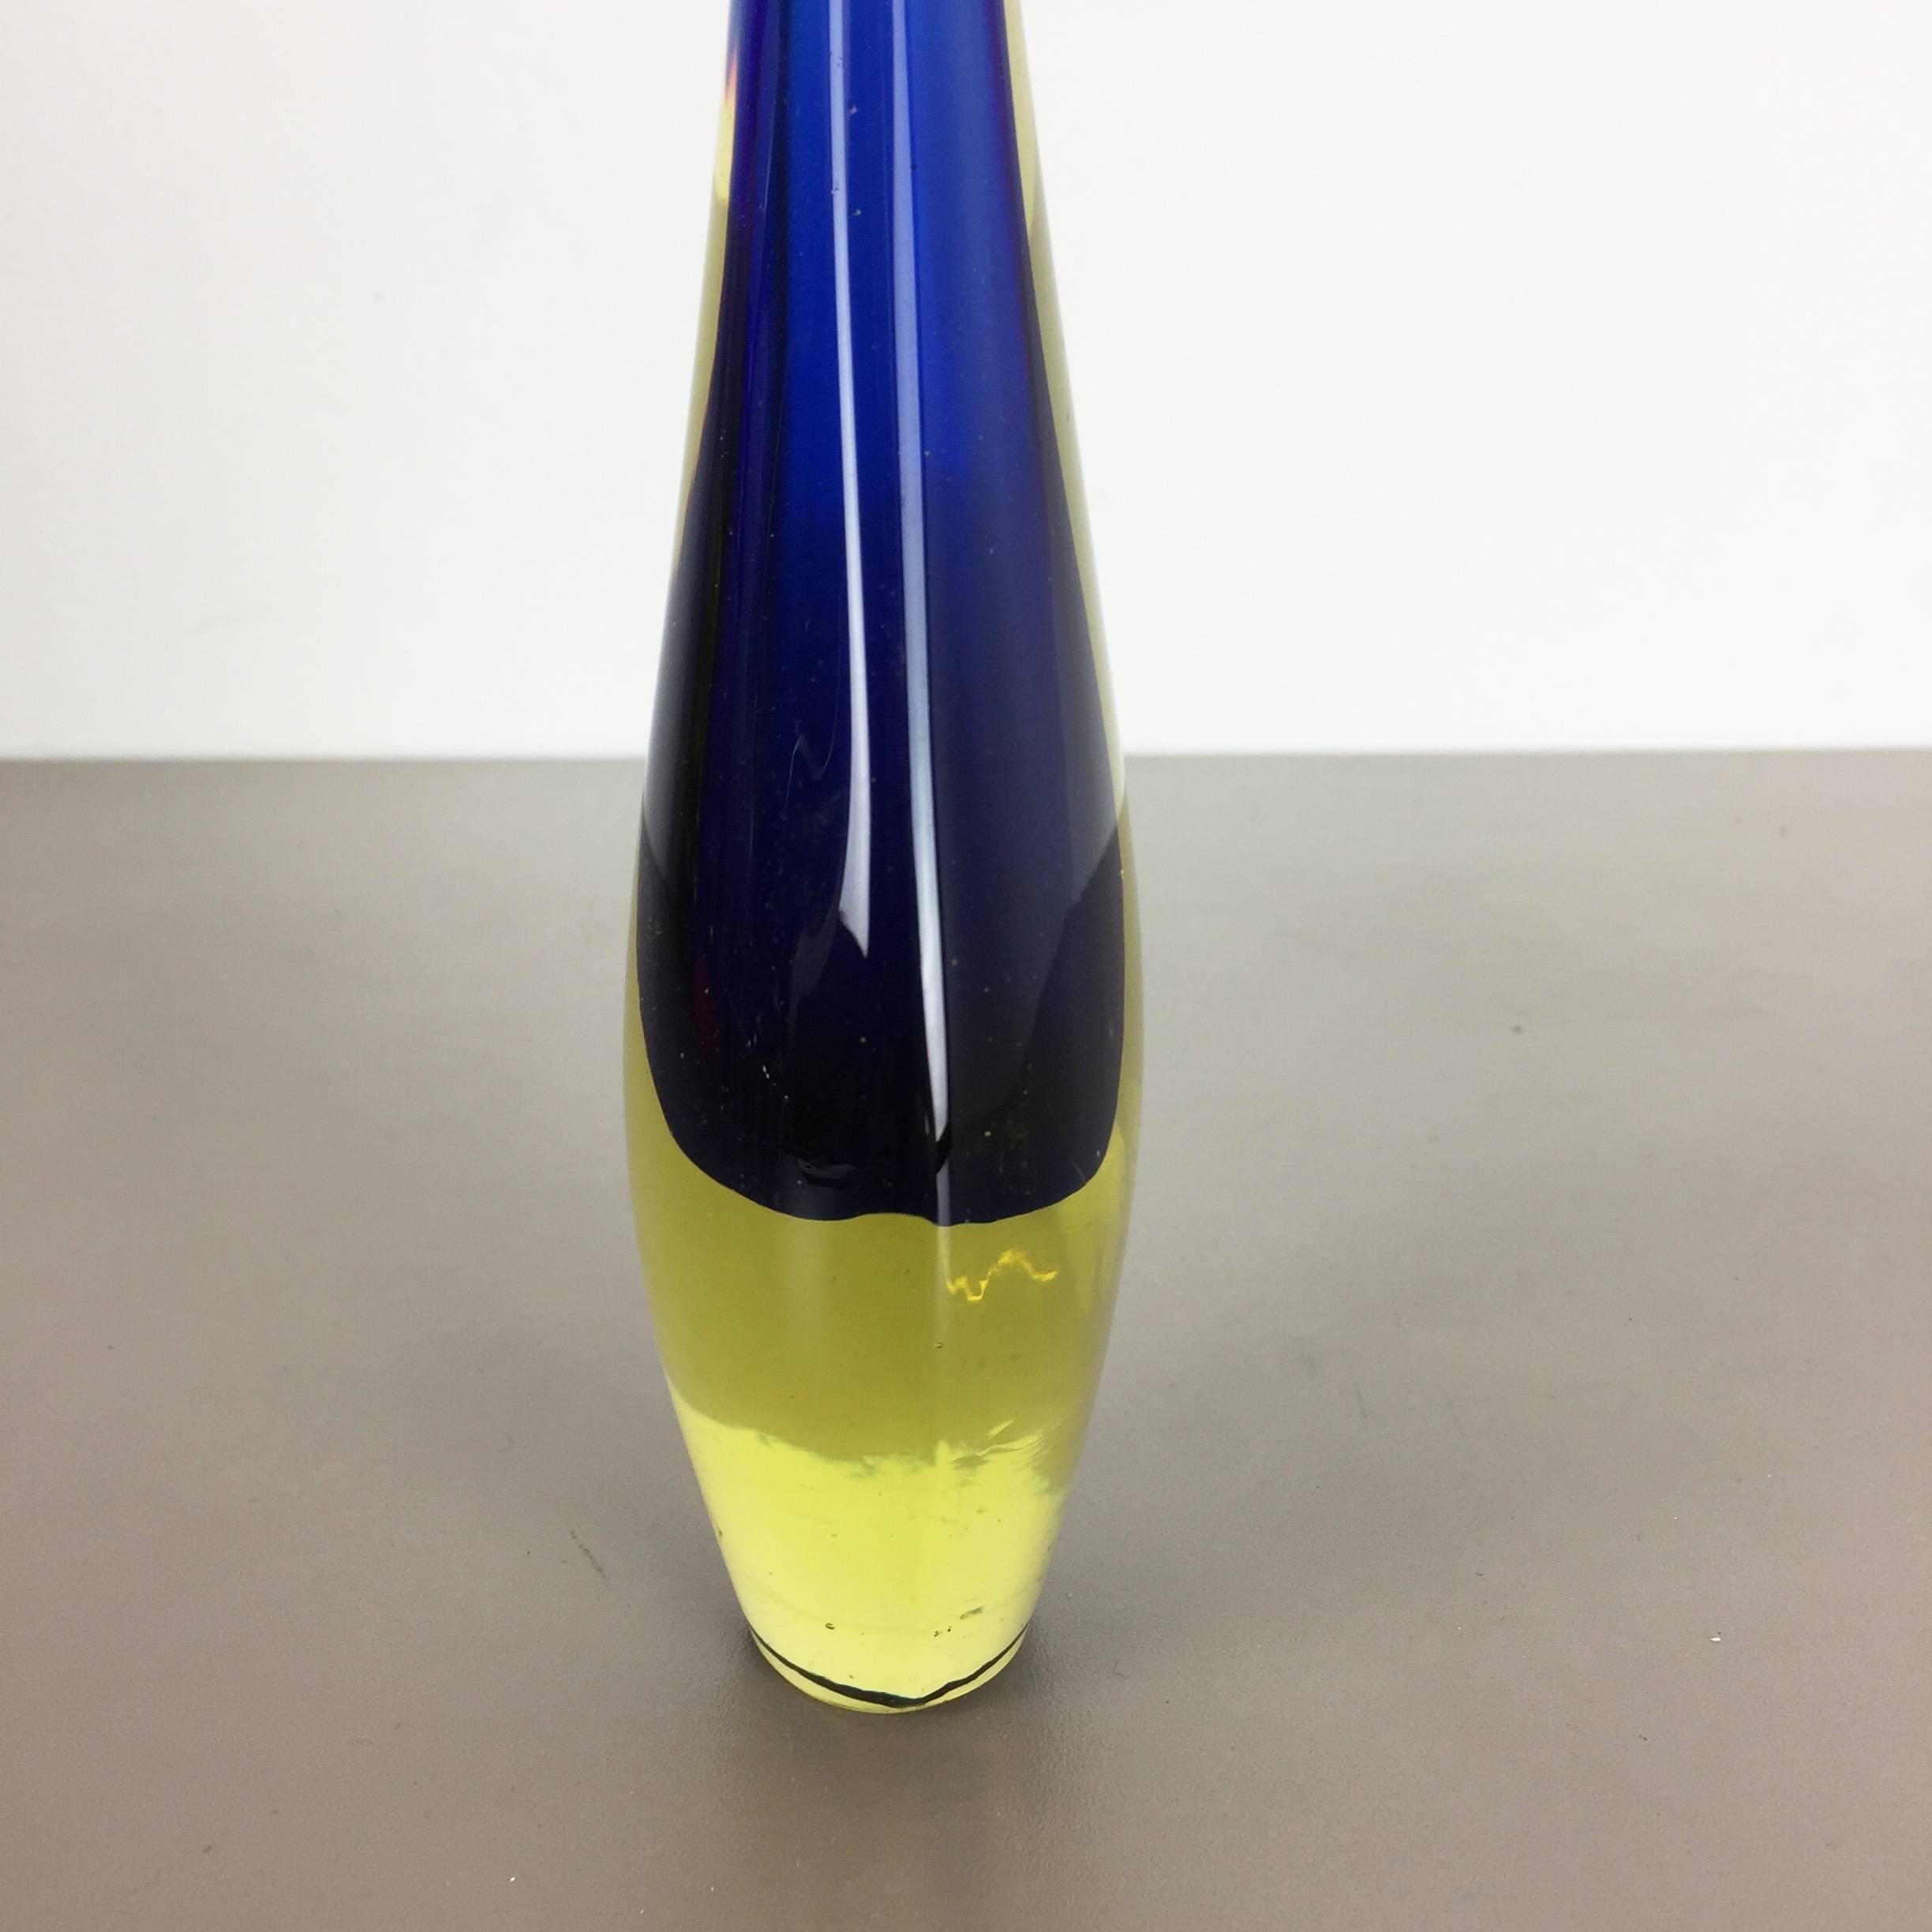 Small 1960s Murano Glass Sommerso Single-Stem Vase by Flavio Poli, Italy (20. Jahrhundert)